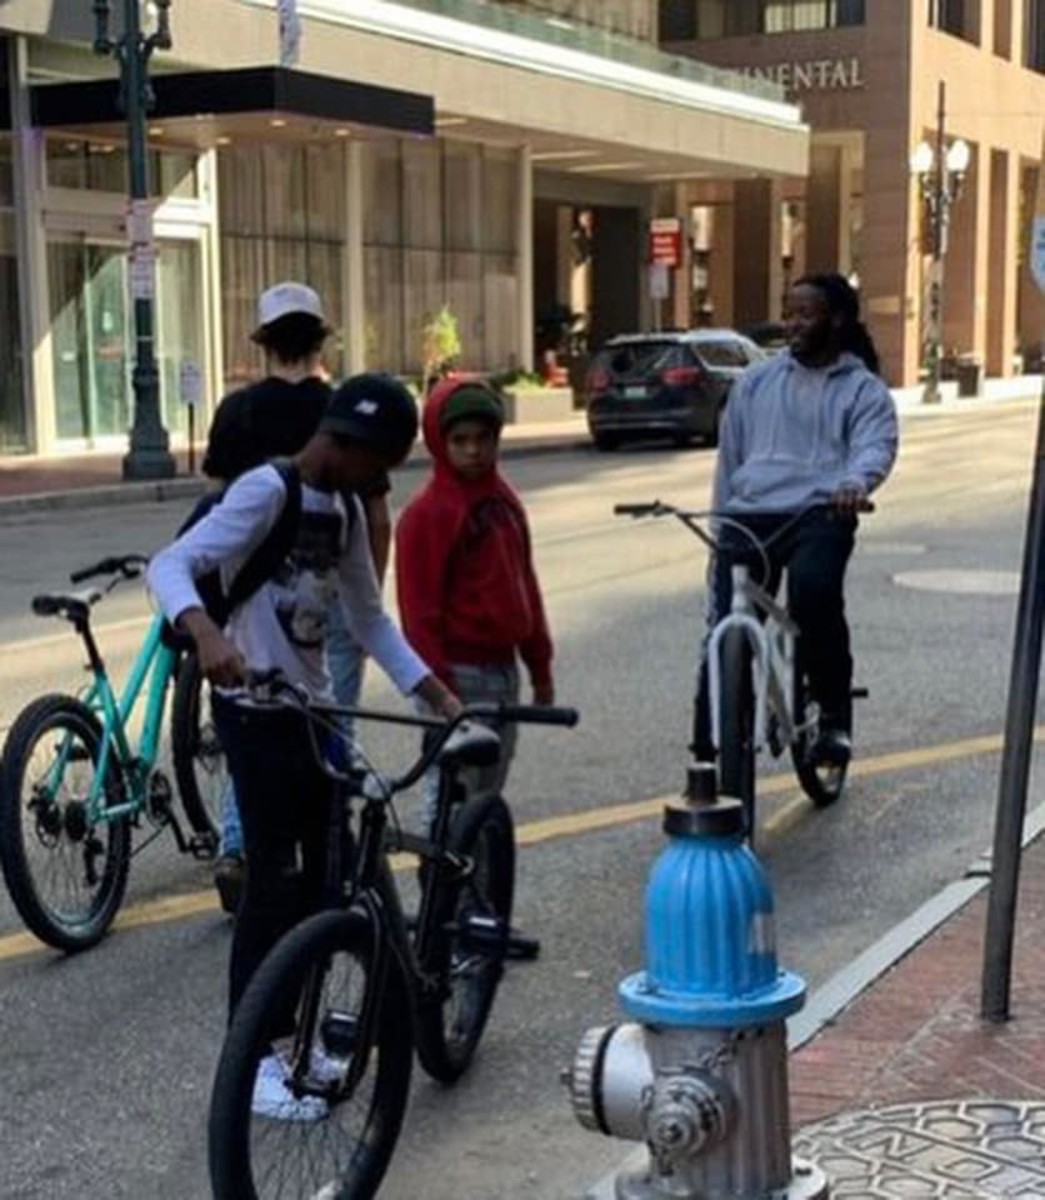 Alvin Kamara with Kids on Bikes